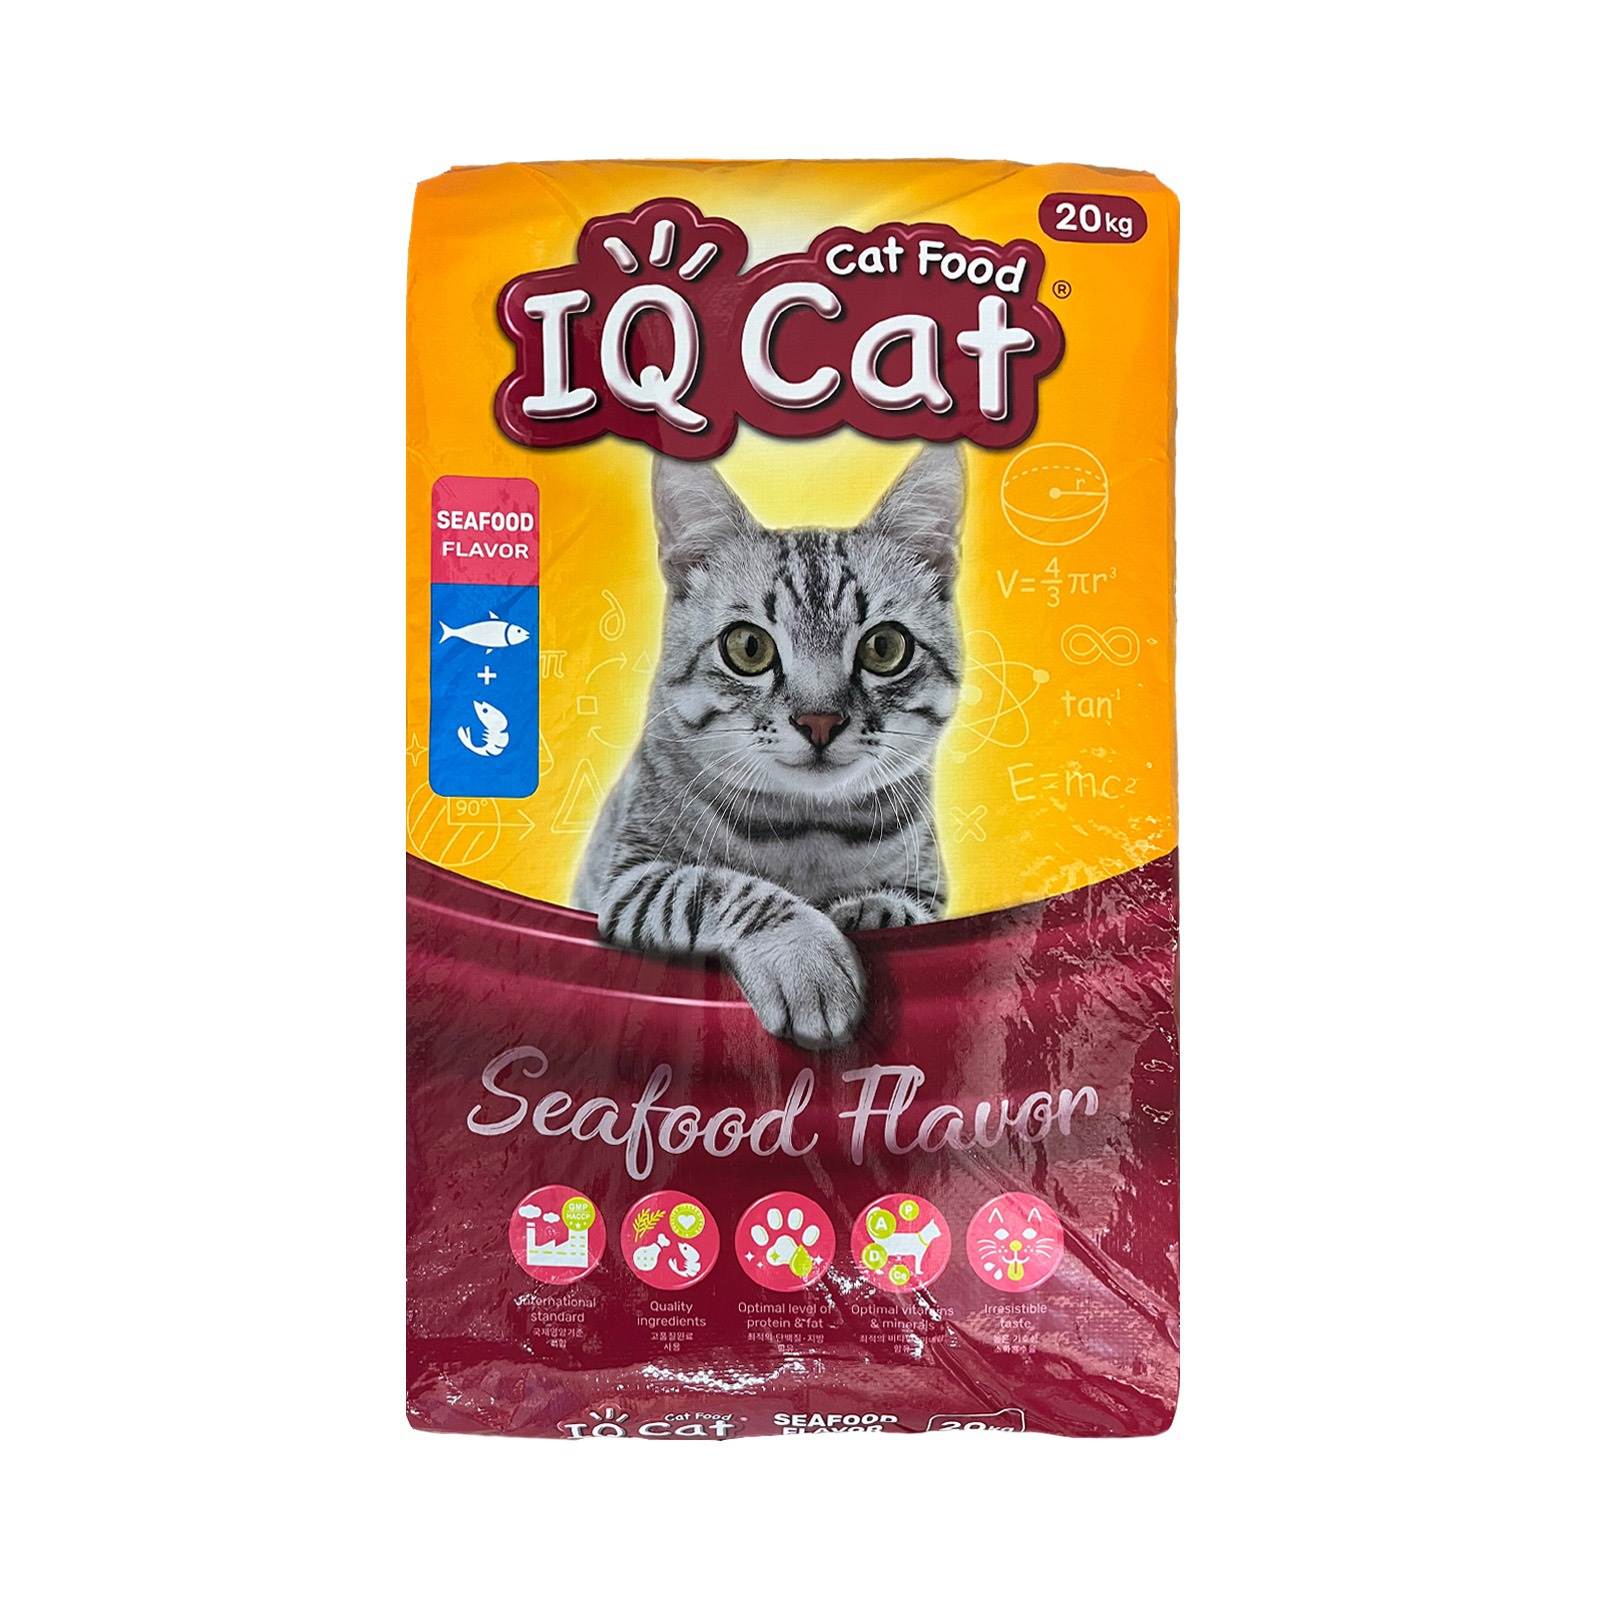 IQ Cat SEAFOOD Flavor Cat Food 20kg